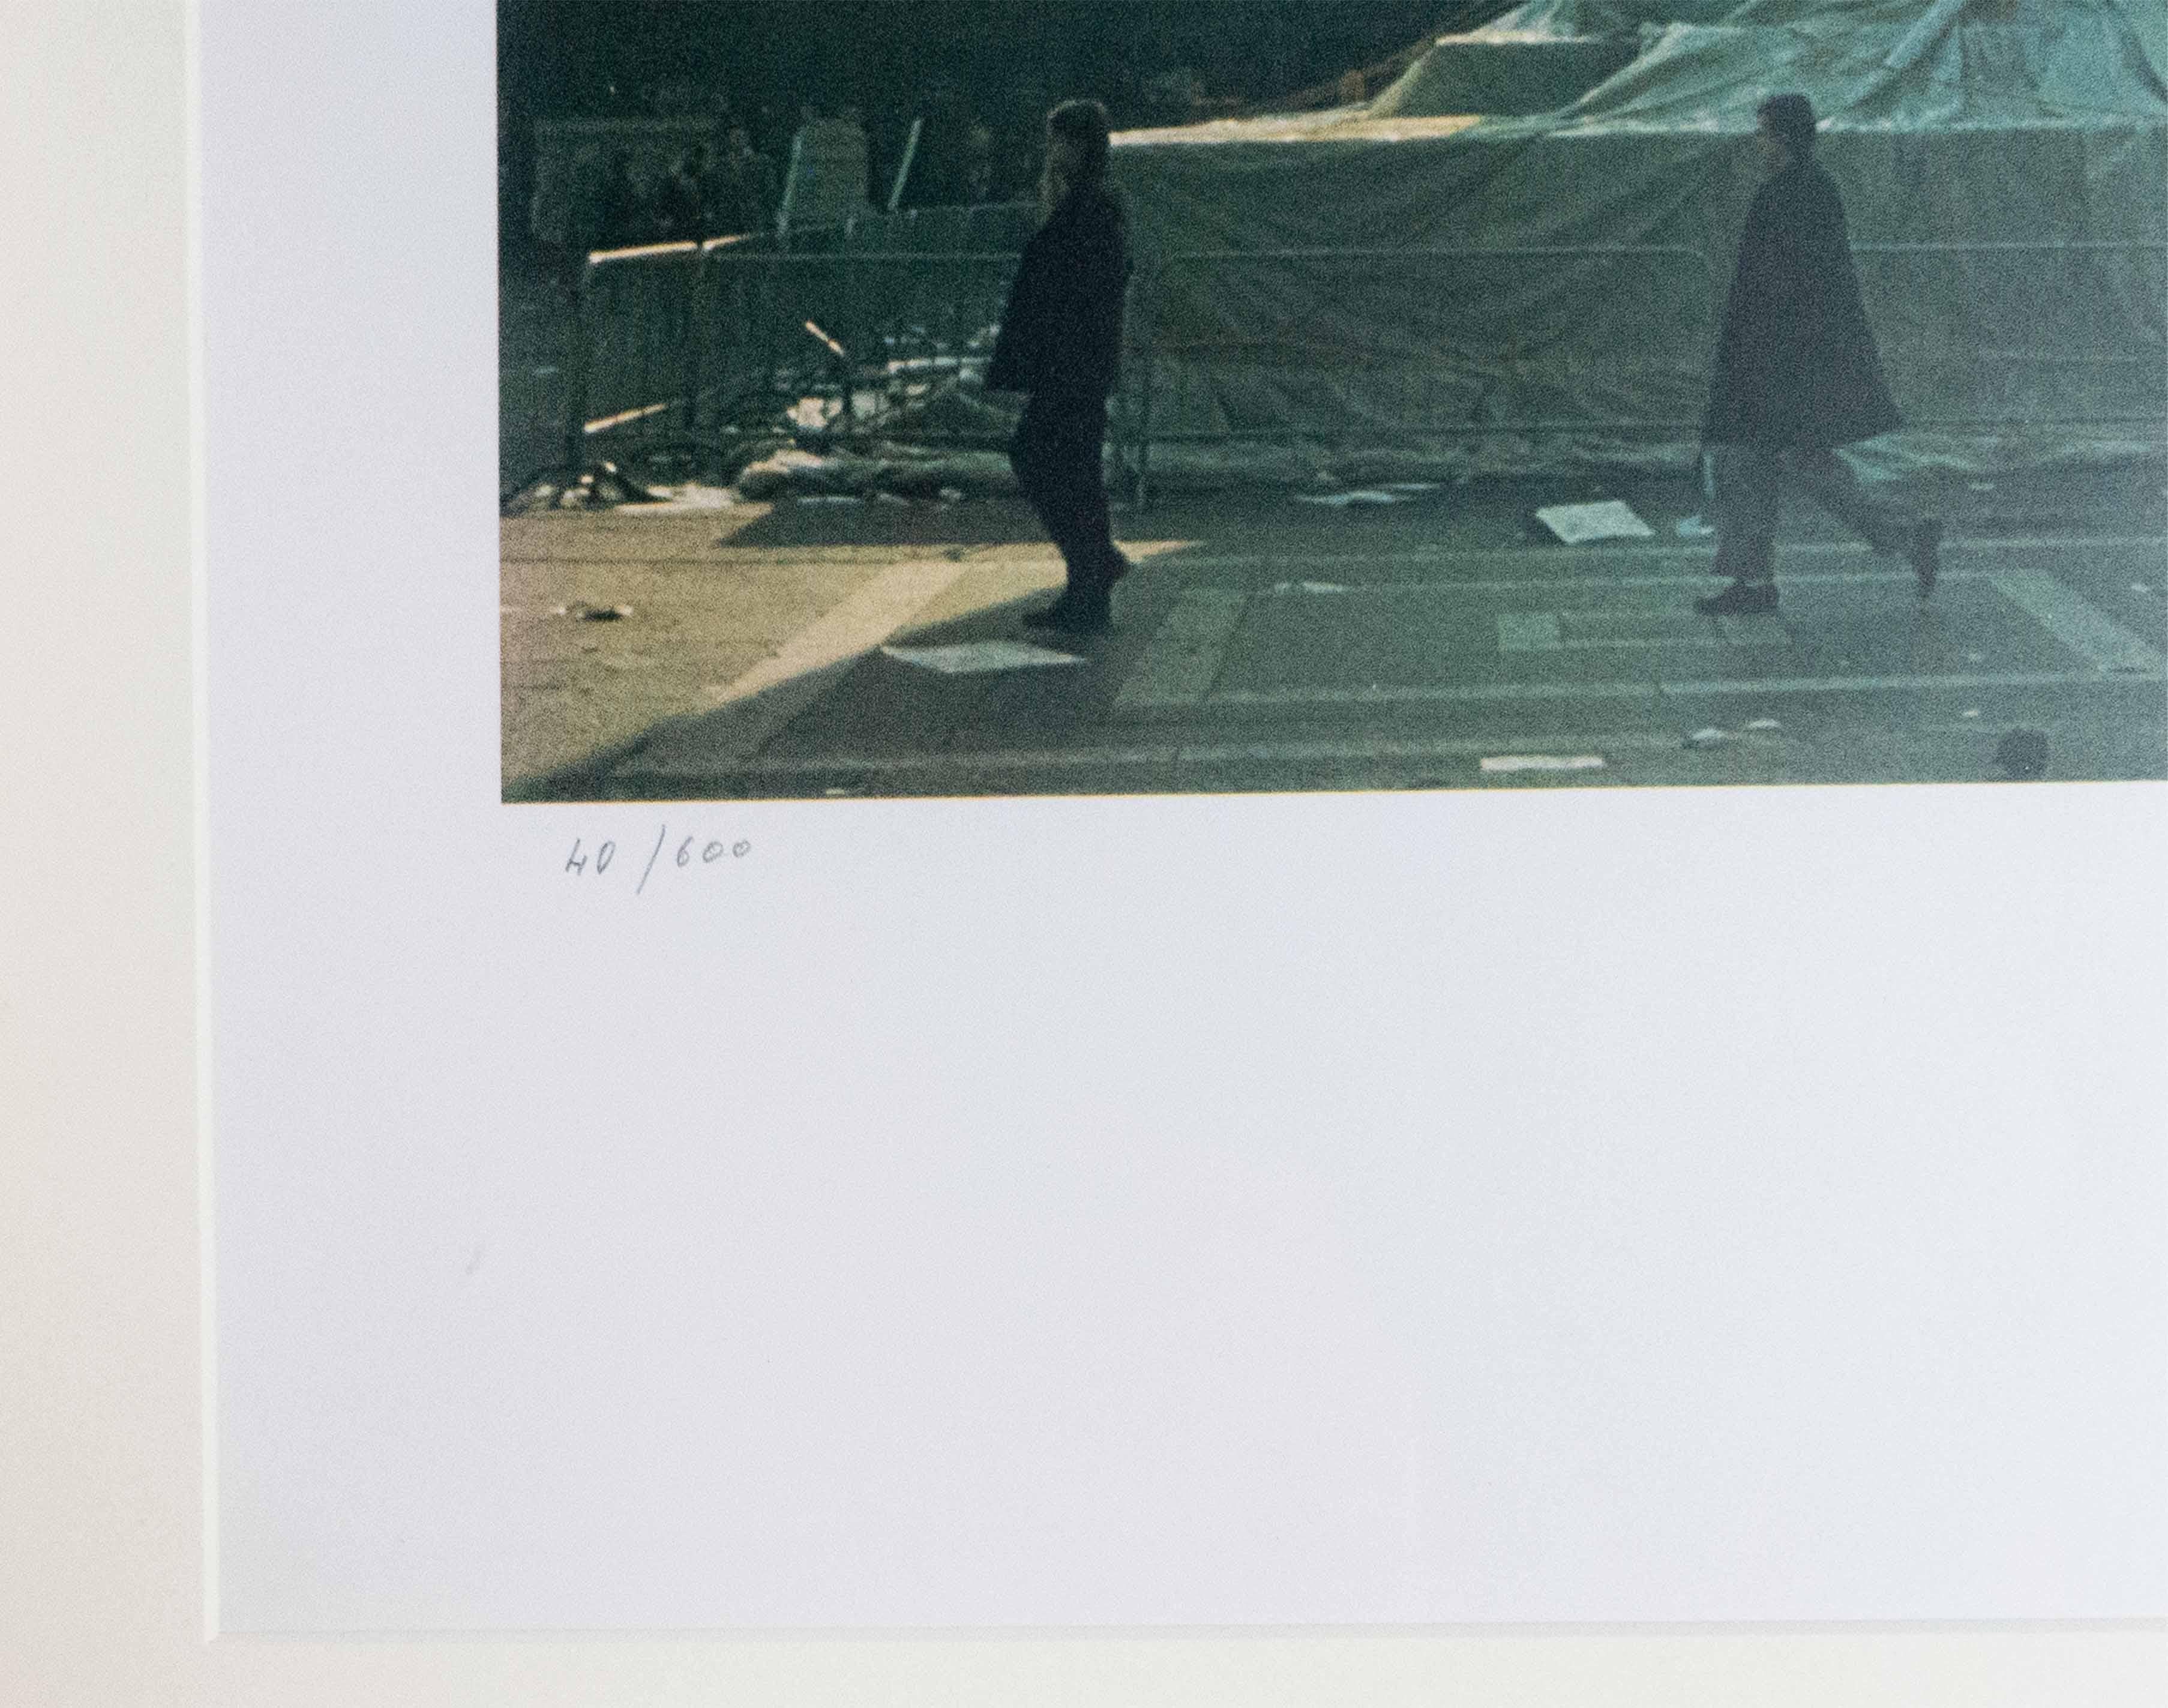 Christo and Jeanne Claude, Wrapped Monument to Vittorio Emanuele, Piazza del Duomo, Milan 1970., 1973, Photograph by Harry Shunk, Publisher: Attilio Codognato, Venice., Photolithography
30 x 42 cm (Image)
Cm 50.8 x 50.8 (Sheet)
Cm 59 x 59 x 6